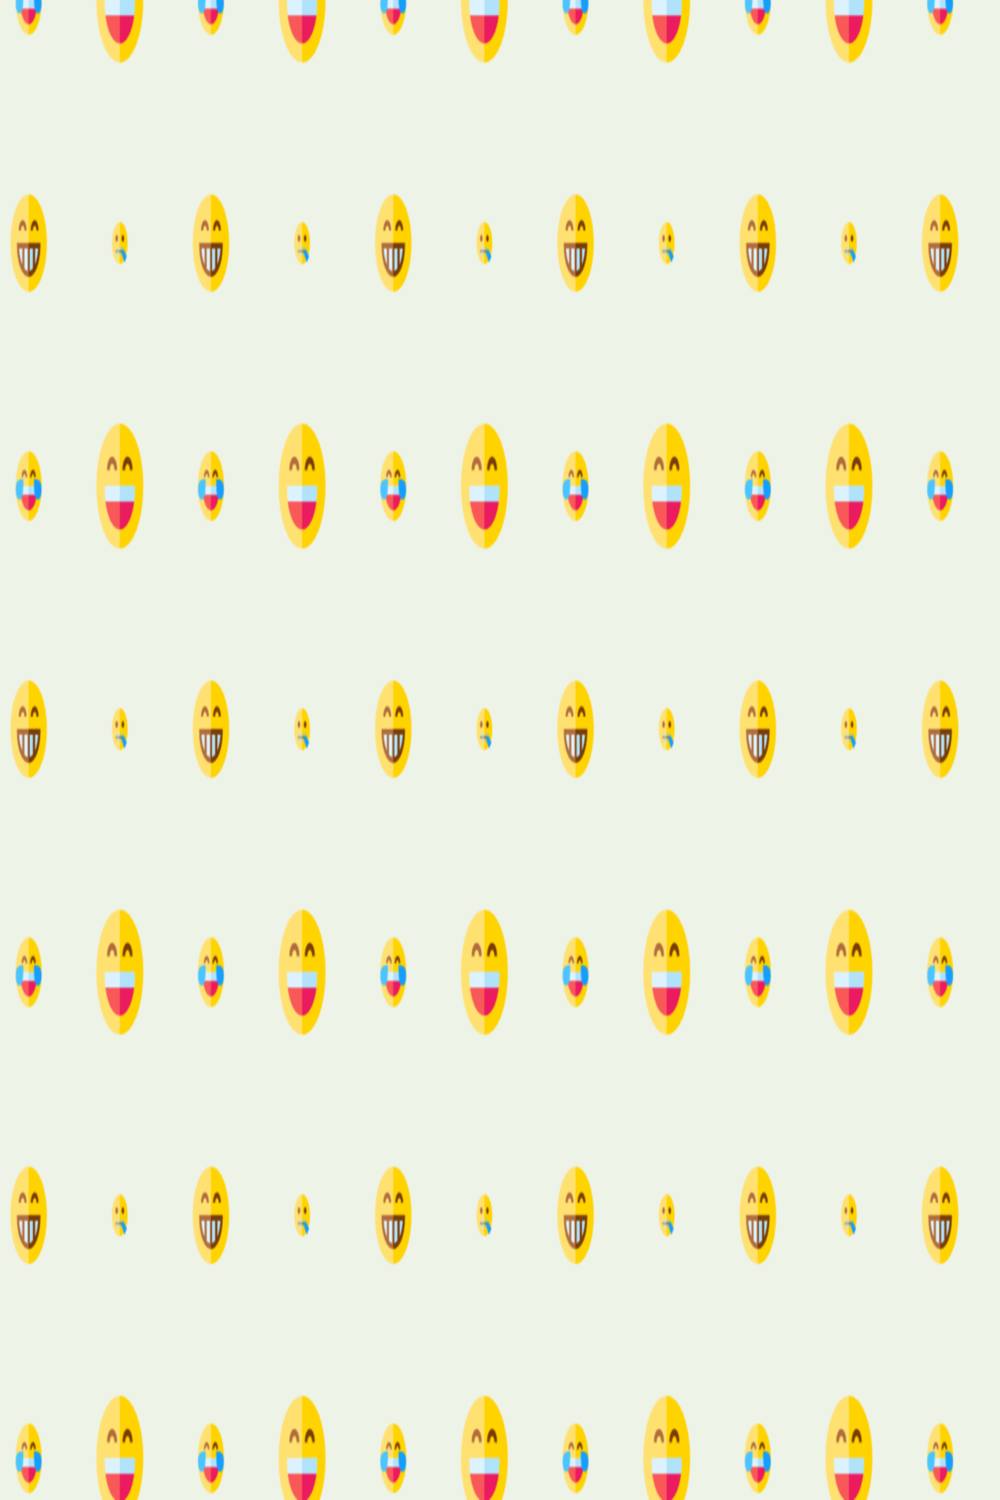 "Express Yourself: A Playful 10 Emoji Pattern Design" pinterest preview image.